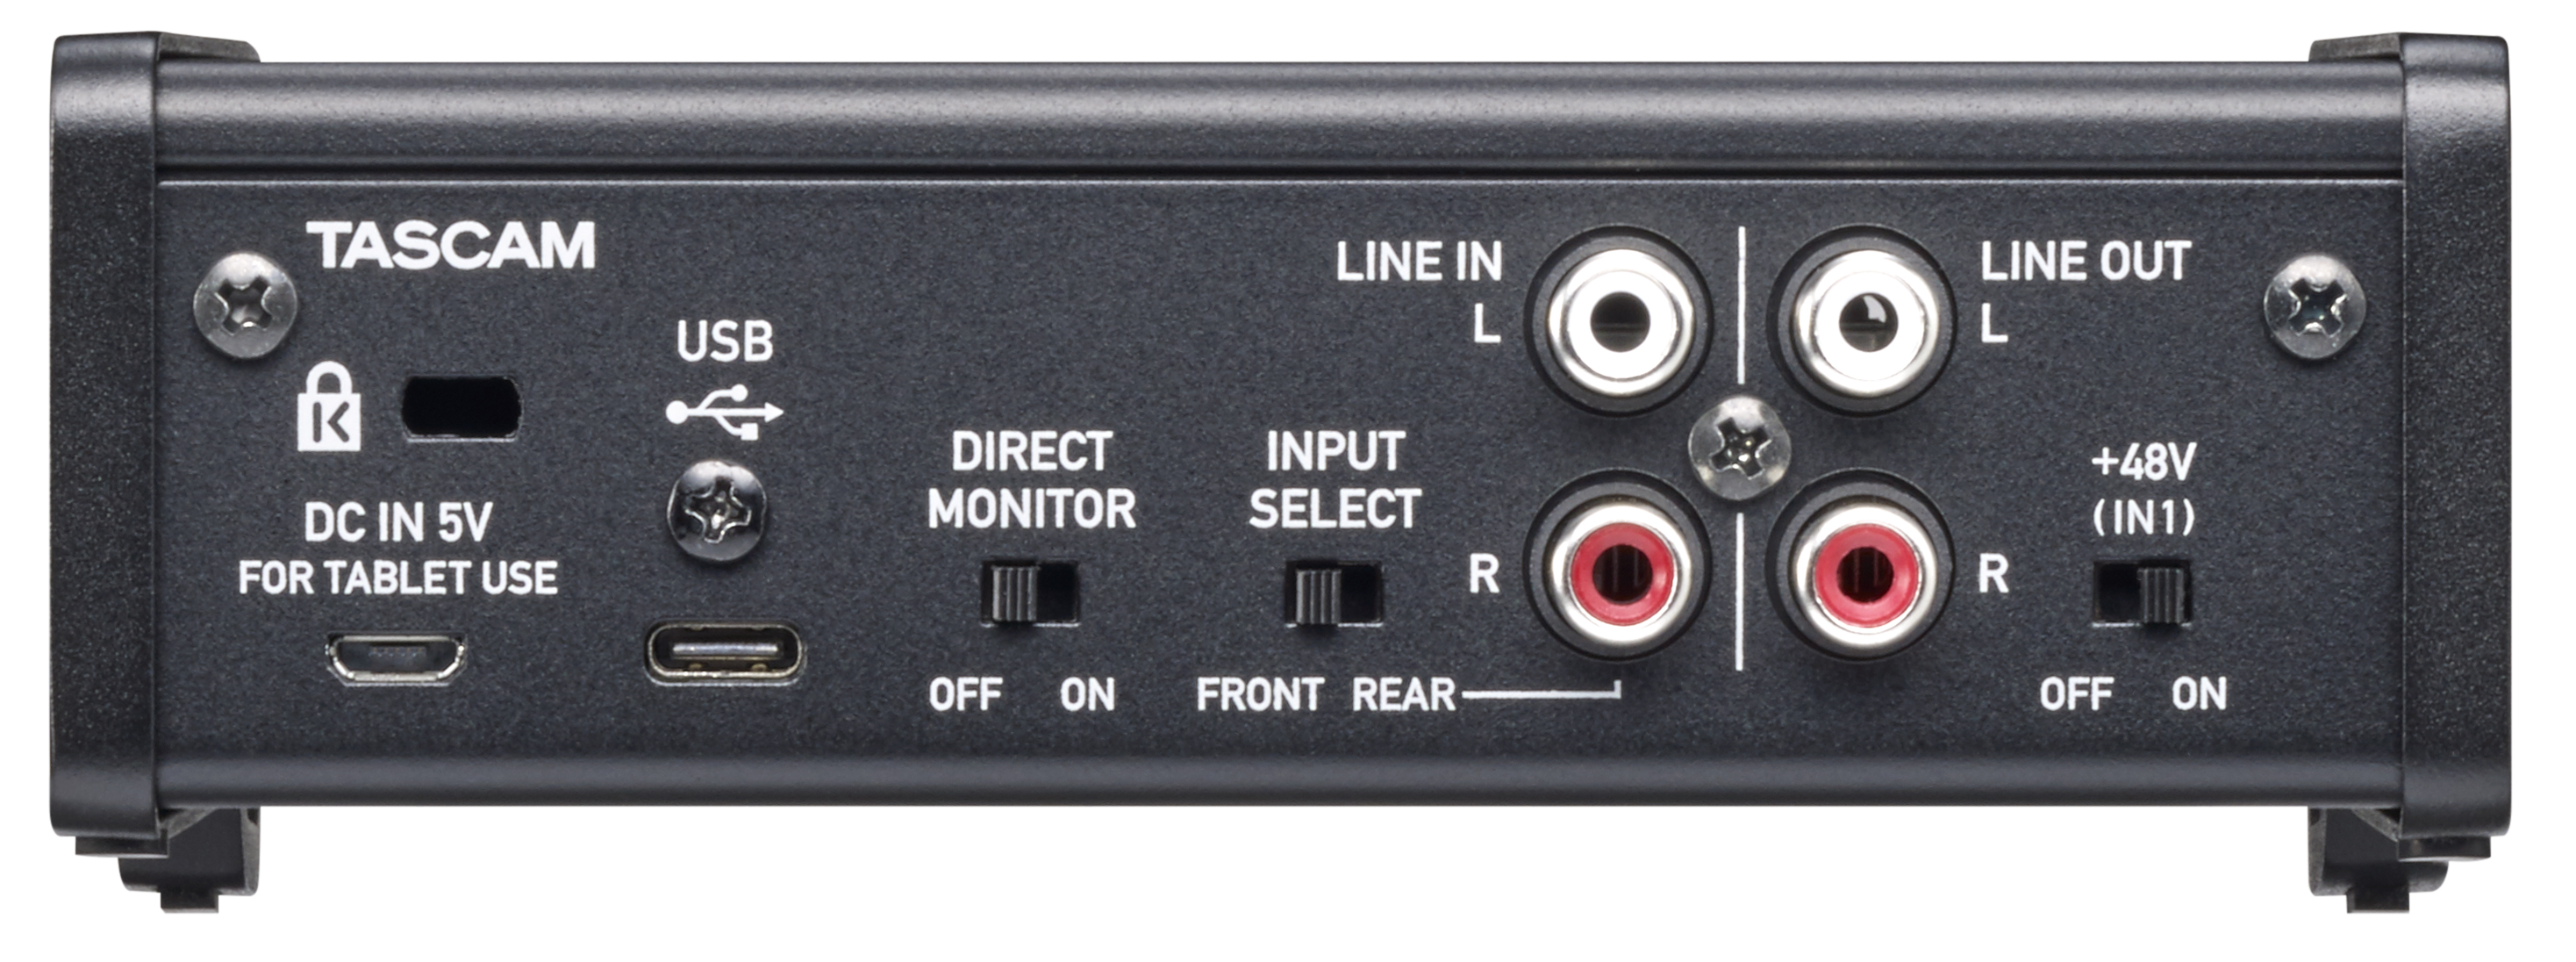 Tascam Us-1x2hr - Interface de audio USB - Variation 2